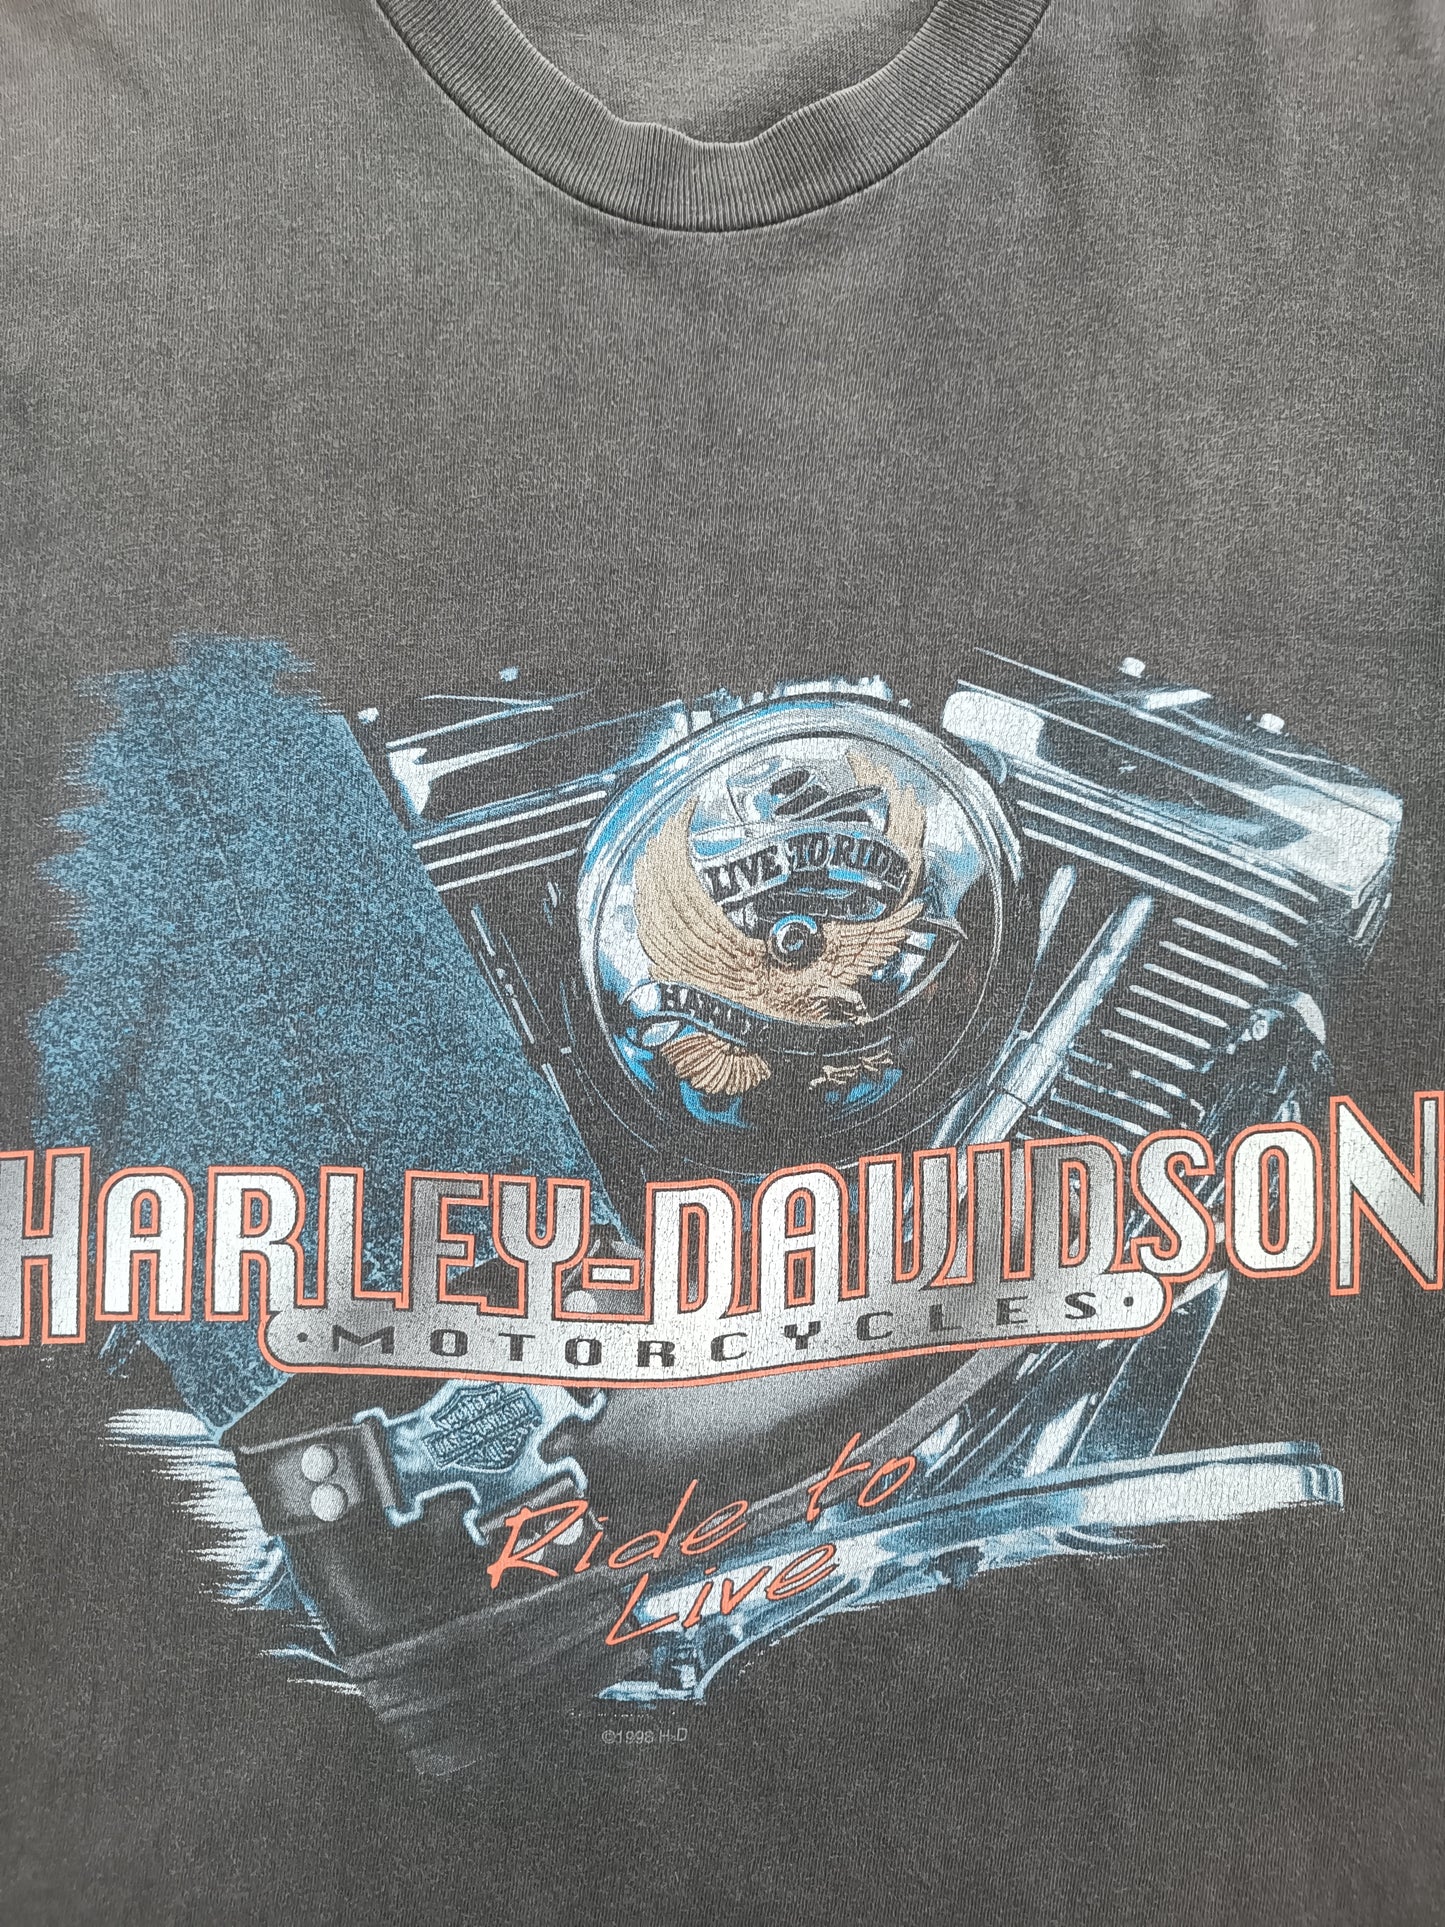 1990s Harley Davidson Ride to Live - XL